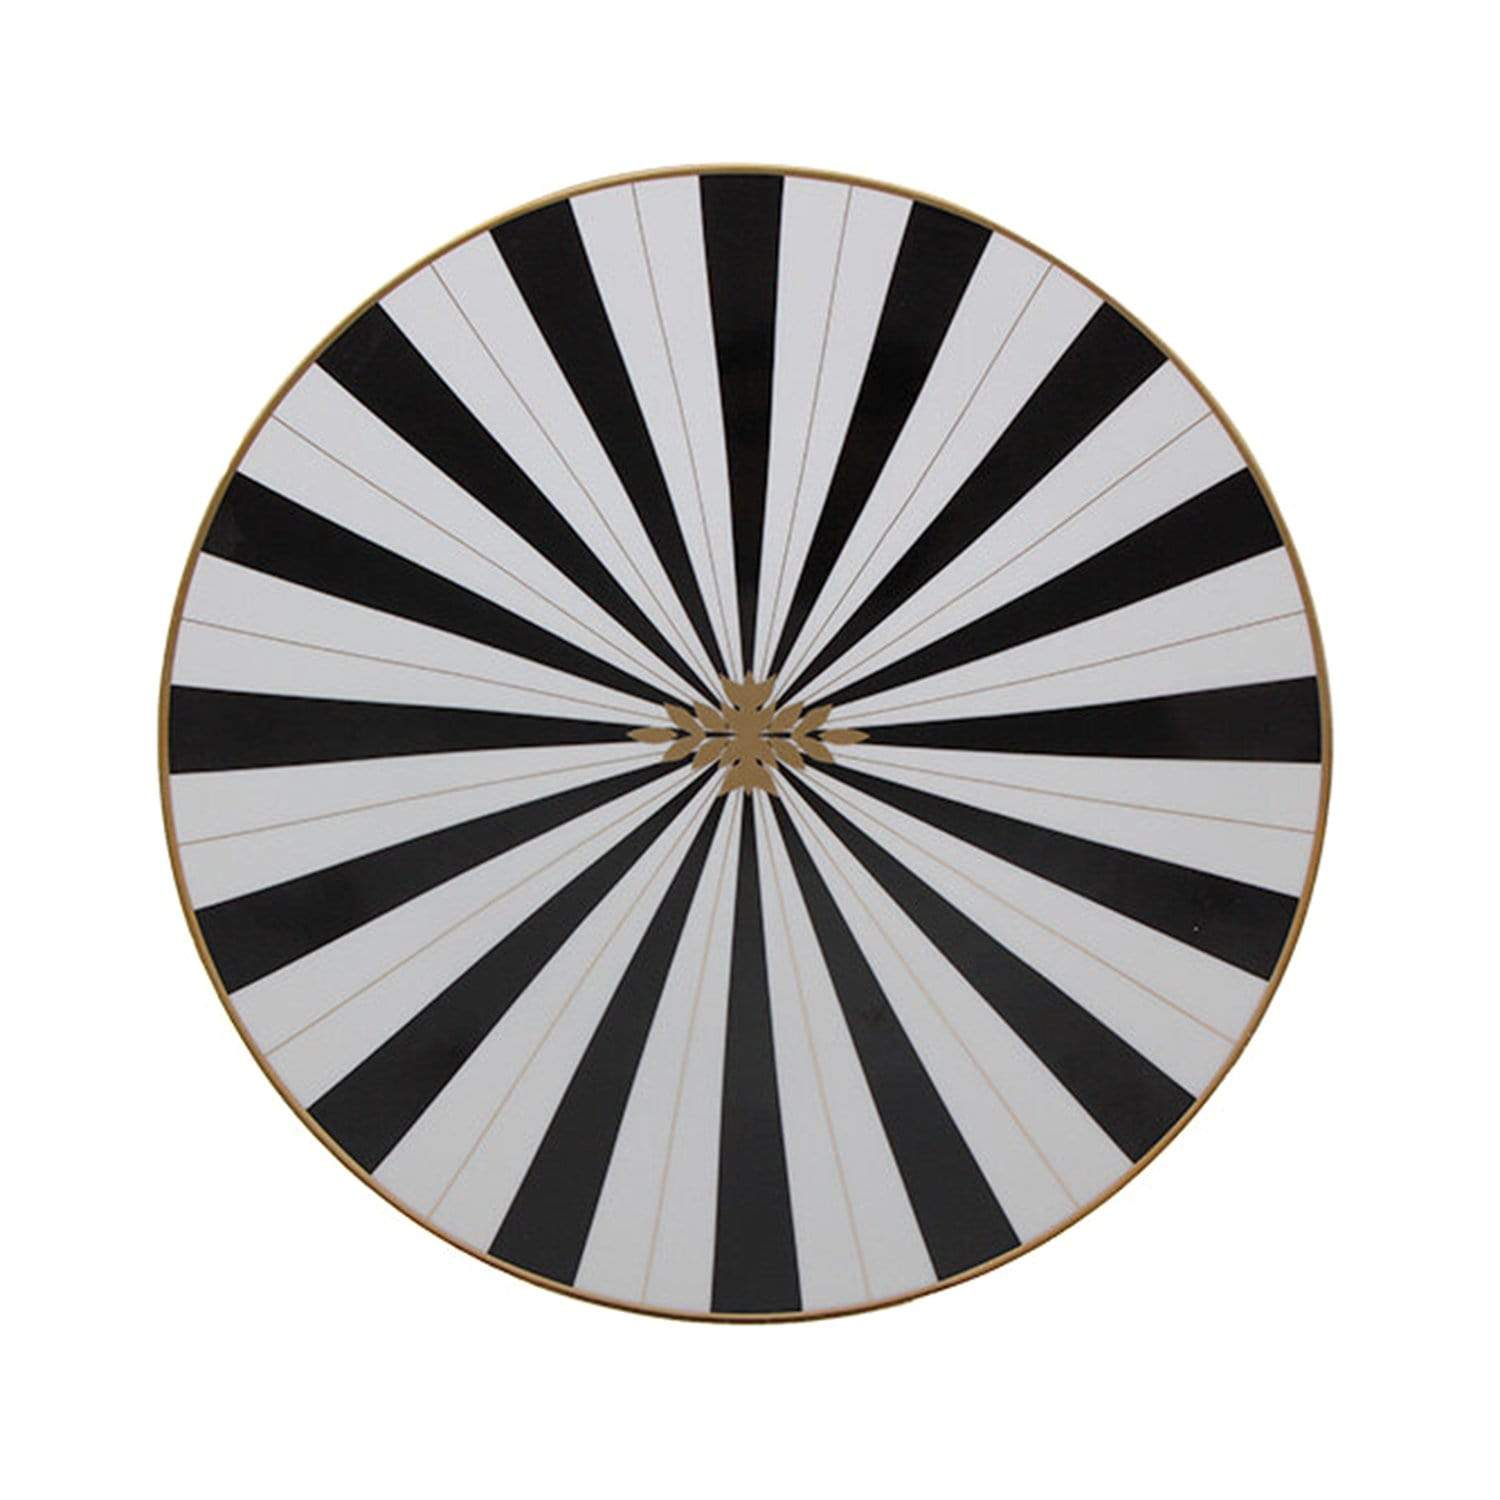 Porland Porselen Palms Flat Plate - 27 cm - 04ALM005174 - Jashanmal Home